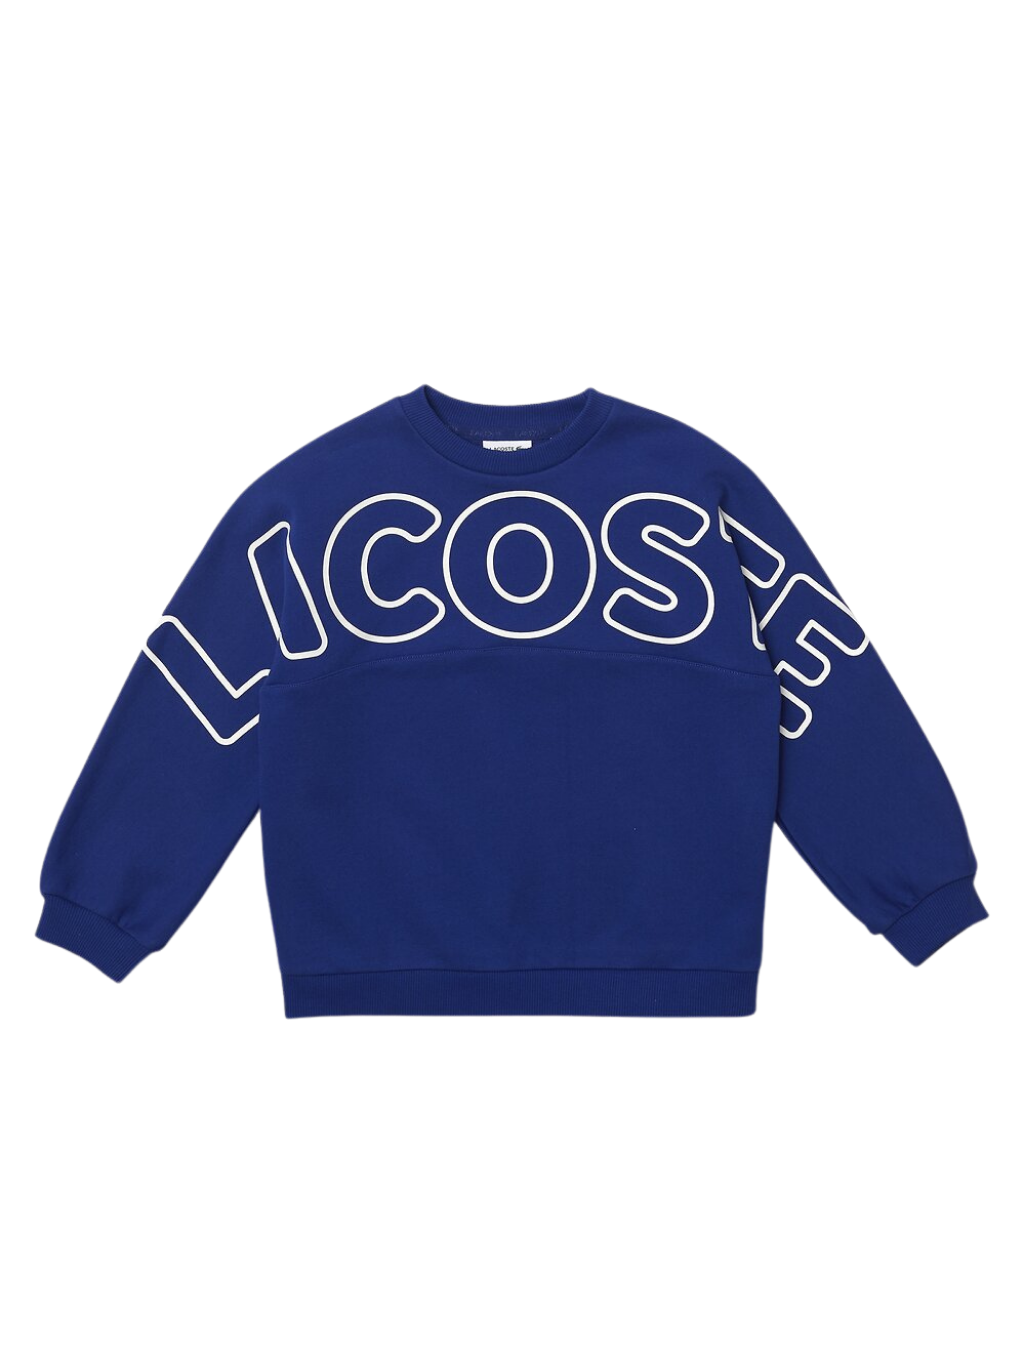 Lacoste Kids Wording Fleece Sweatshirt Blue